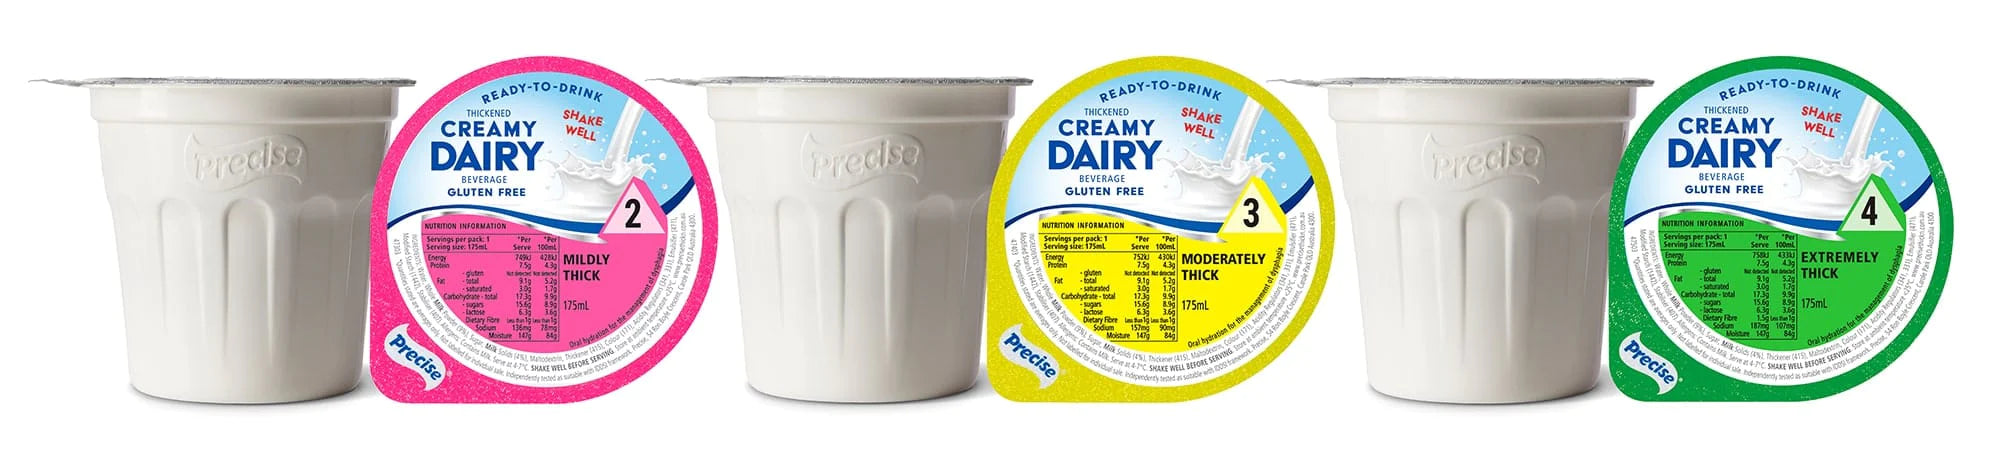 Precise Level 2 / Carton of 24 Precise Ready To Drink Creamy Dairy 175ml TRI47303__CT